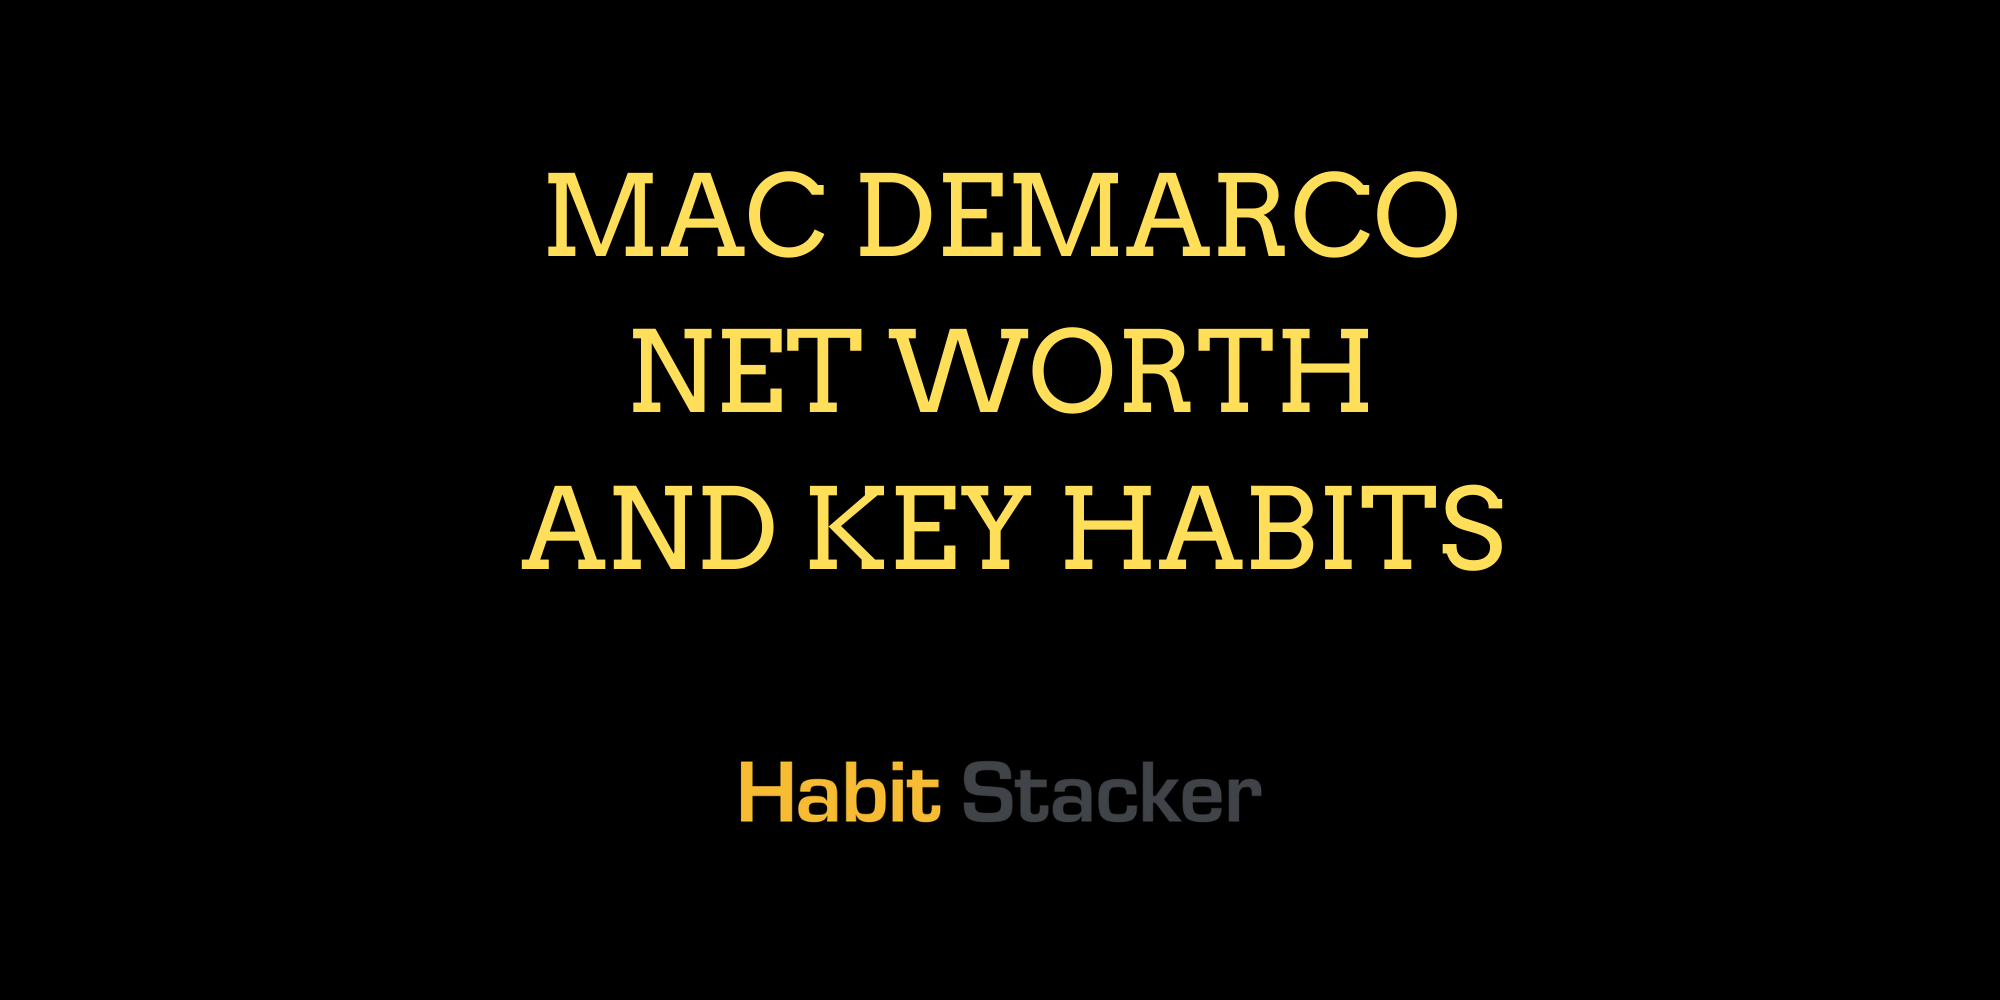 Mac Demarco Net Worth and Key Habits